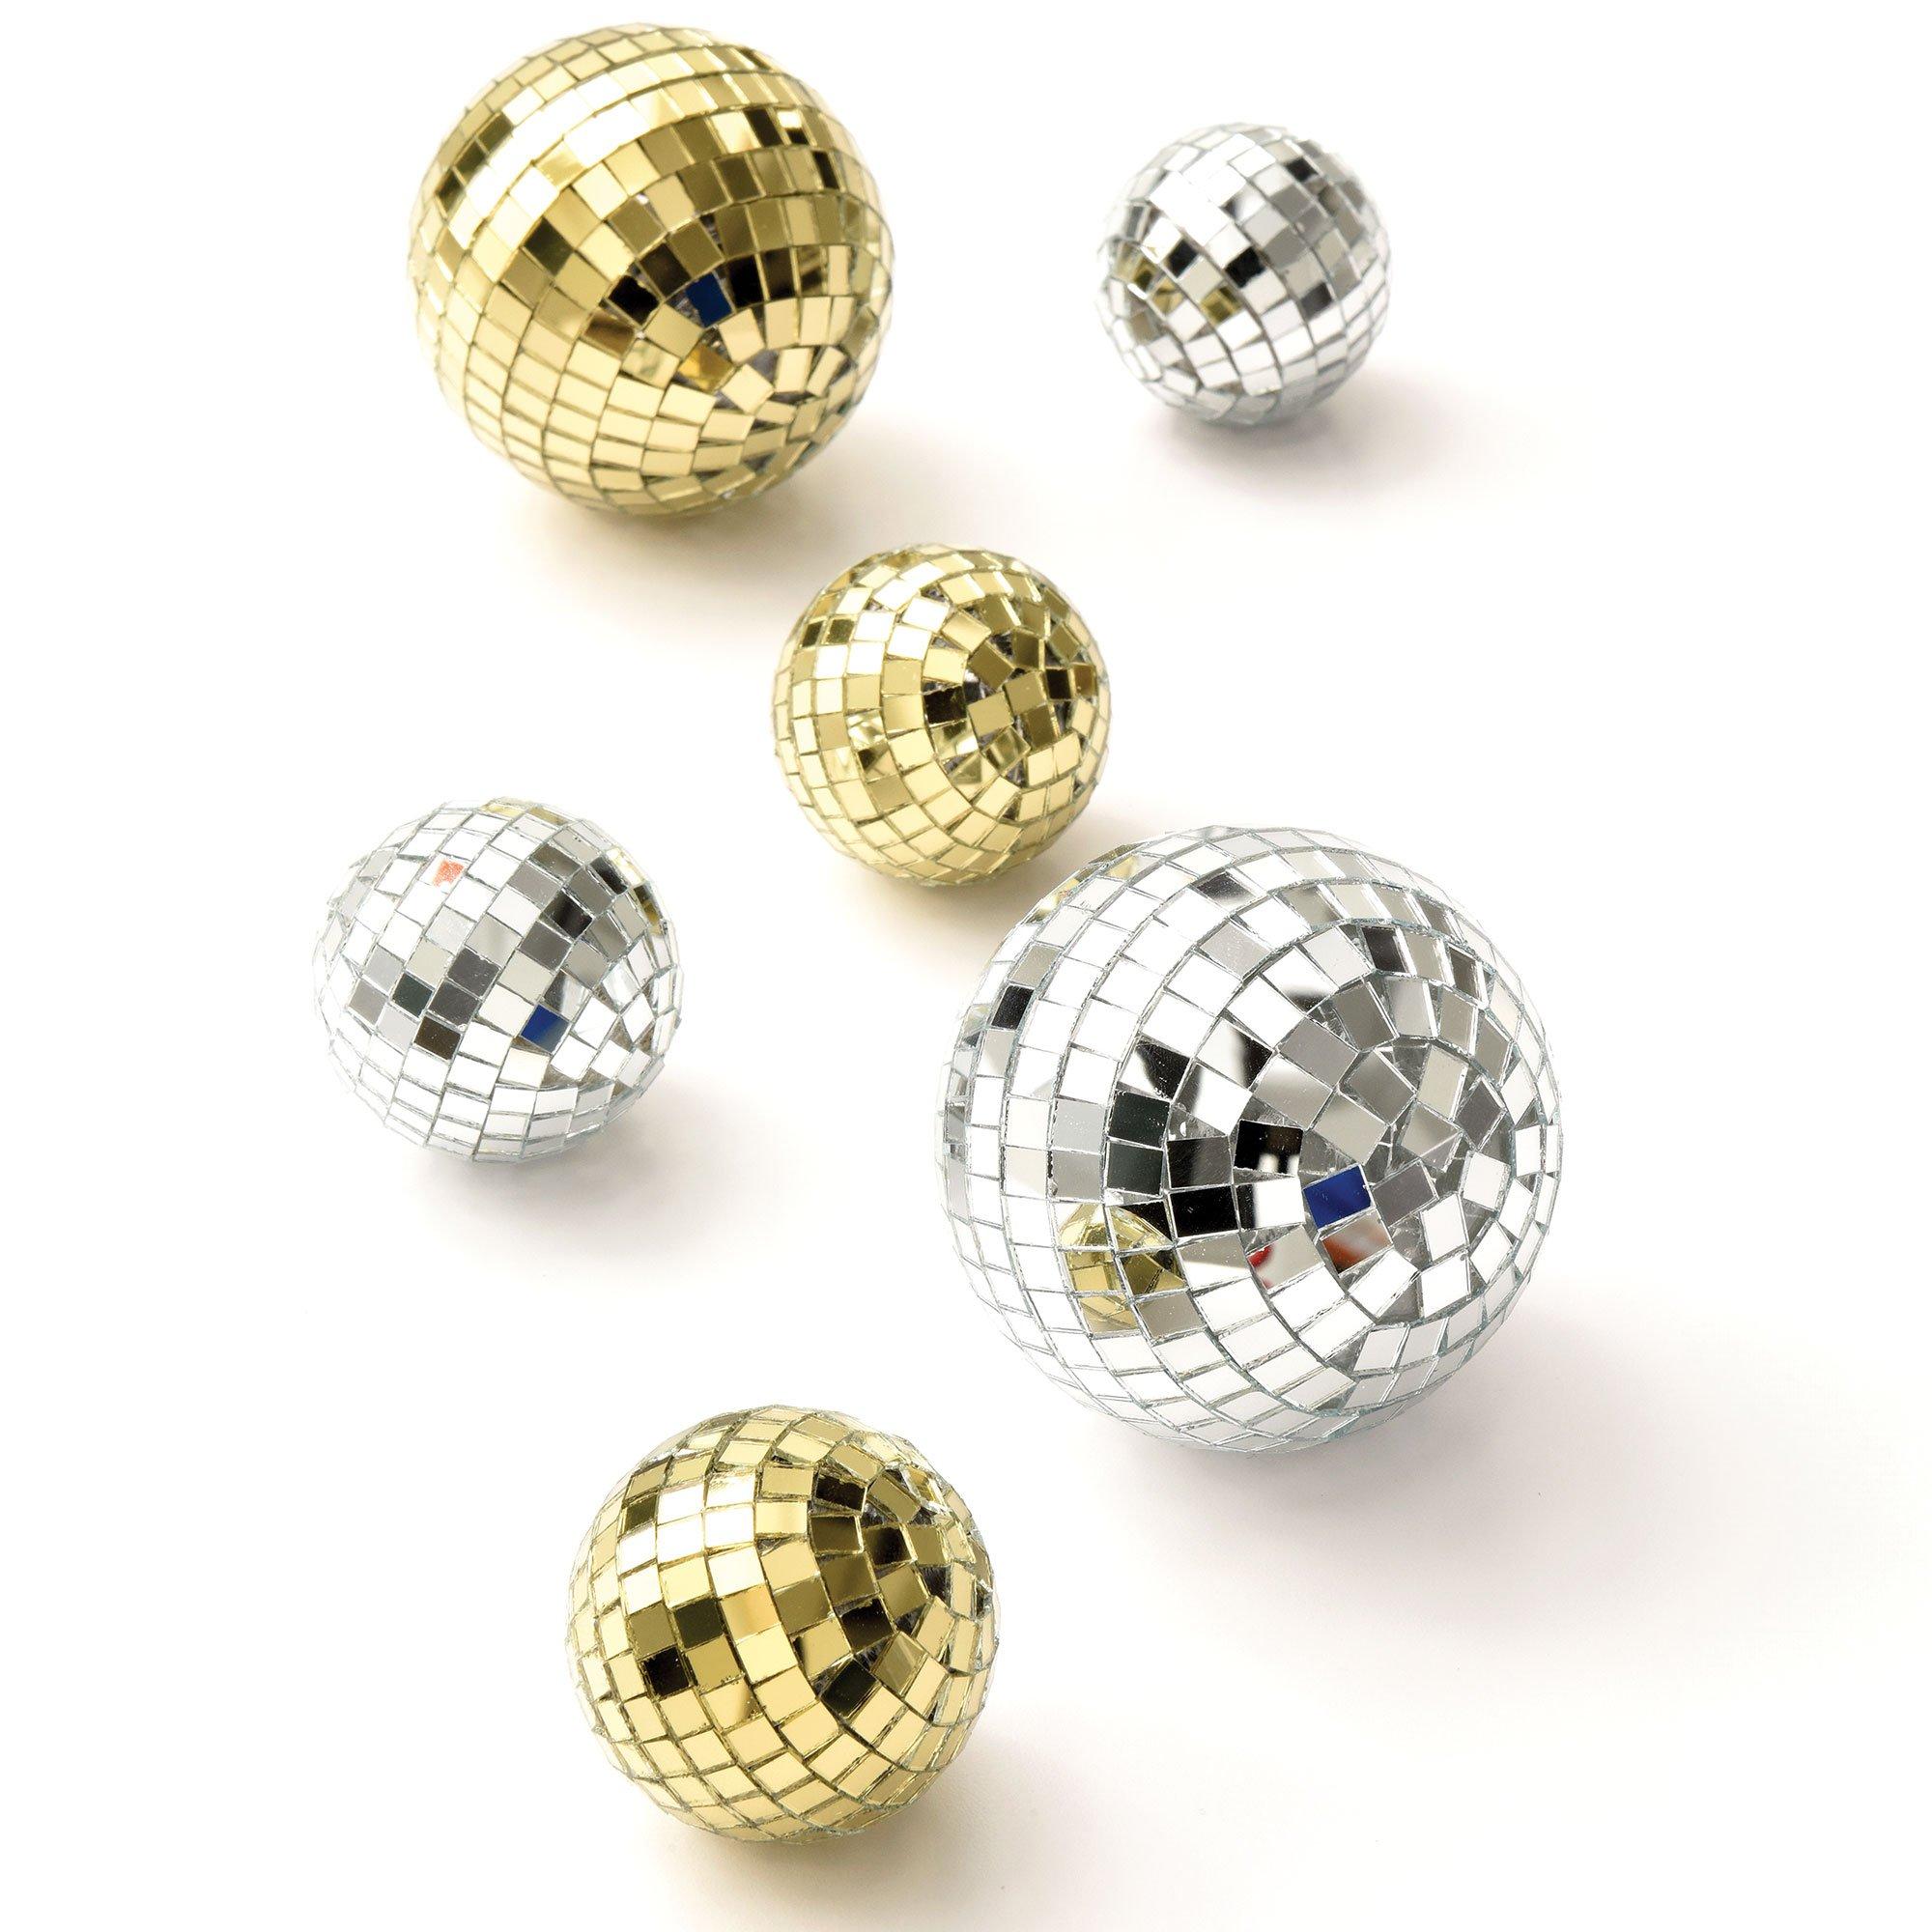 Purchase Wholesale mini disco balls. Free Returns & Net 60 Terms